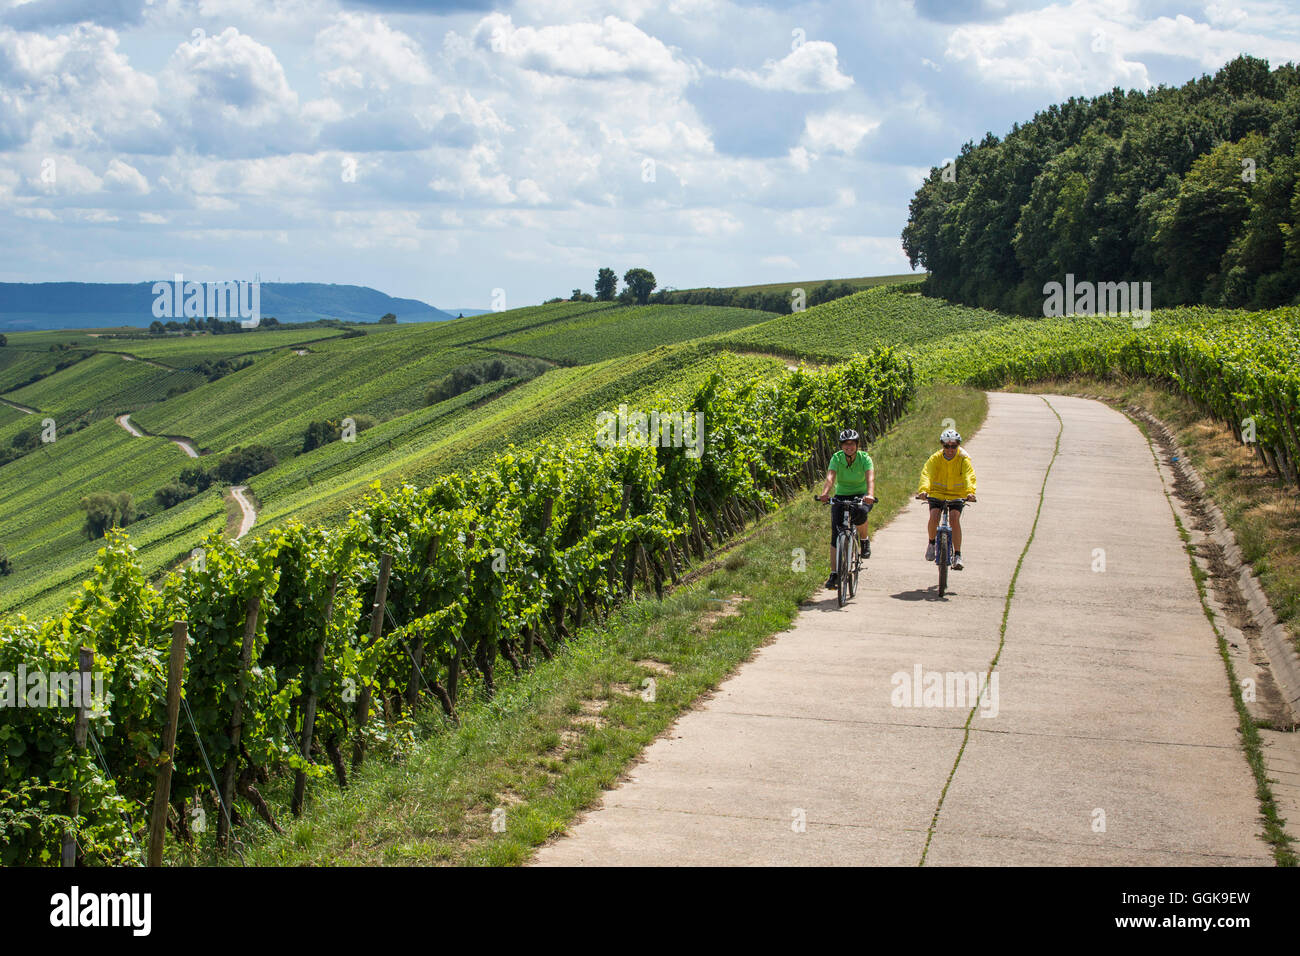 Cyclists on a path through Escherndorfer Fuerstenberg vineyard, near Keohler, Franconia, Bavaria, Germany Stock Photo